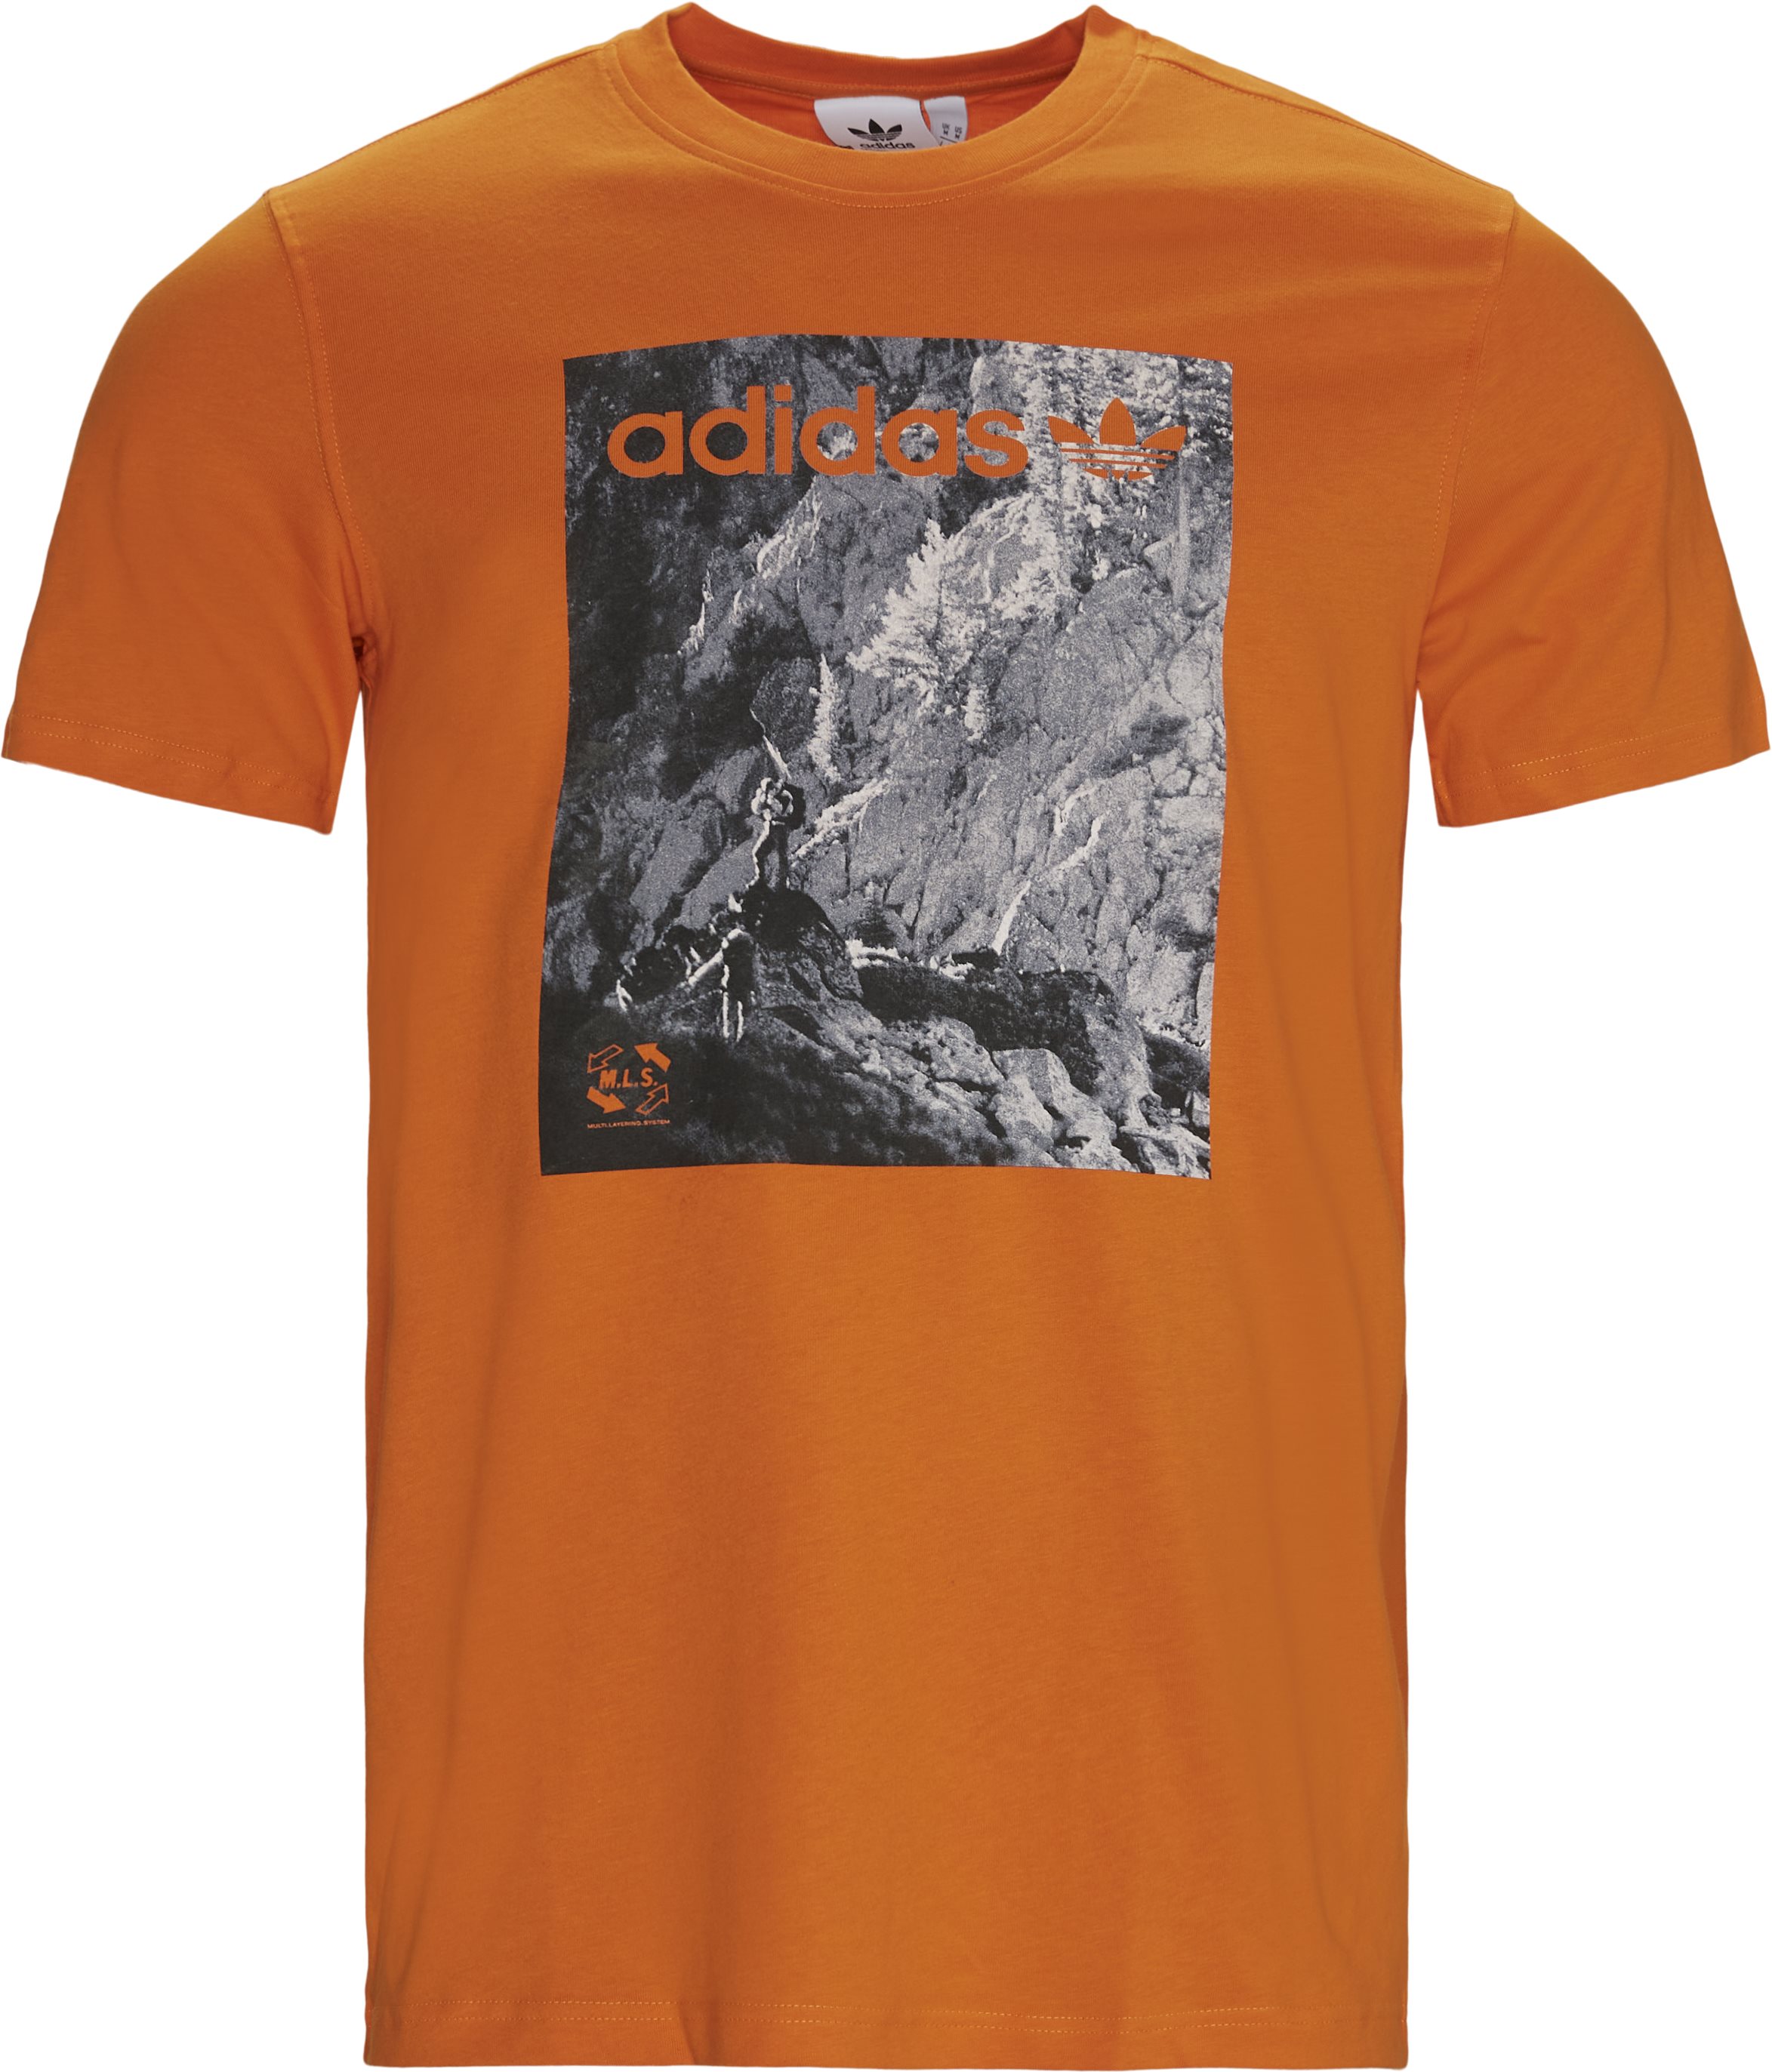 ADV - T-shirts - Regular fit - Orange